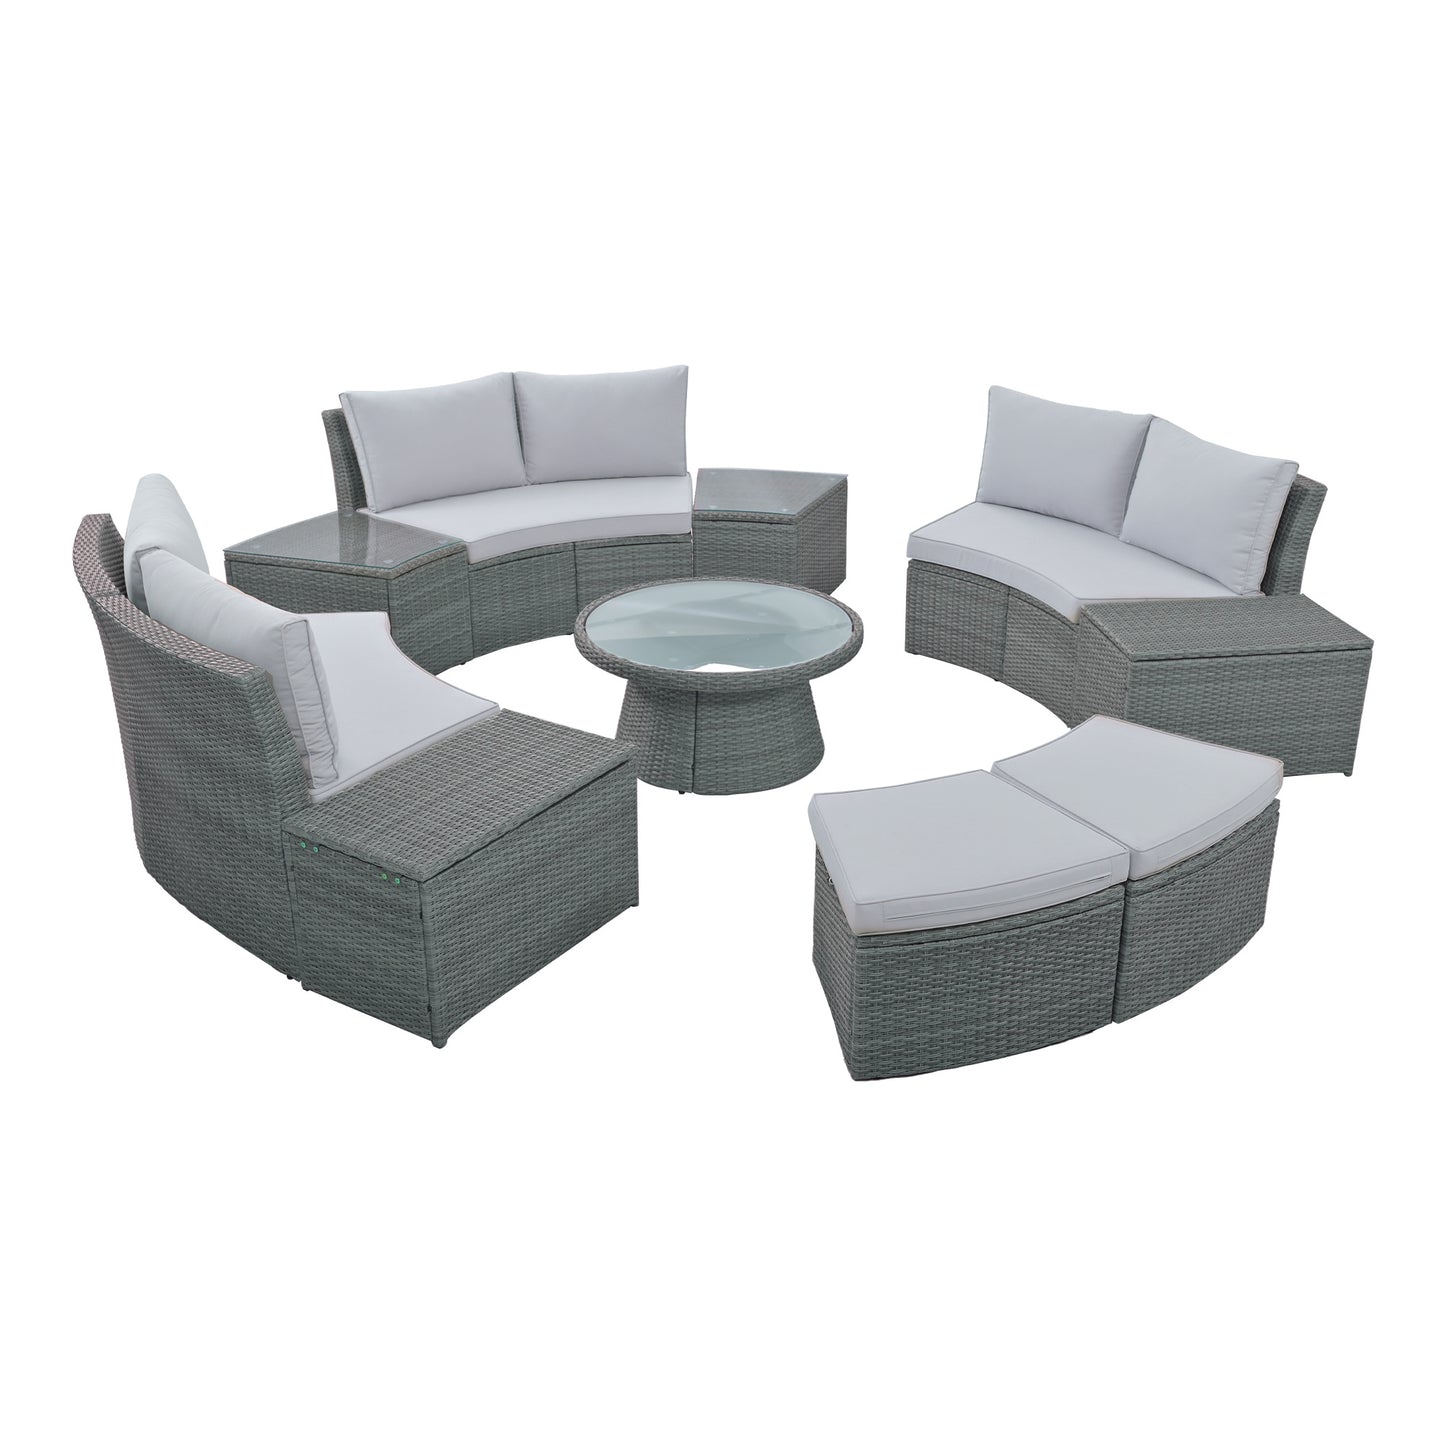 10-piece outdoor sectional half round patio rattan sofa set, light gray